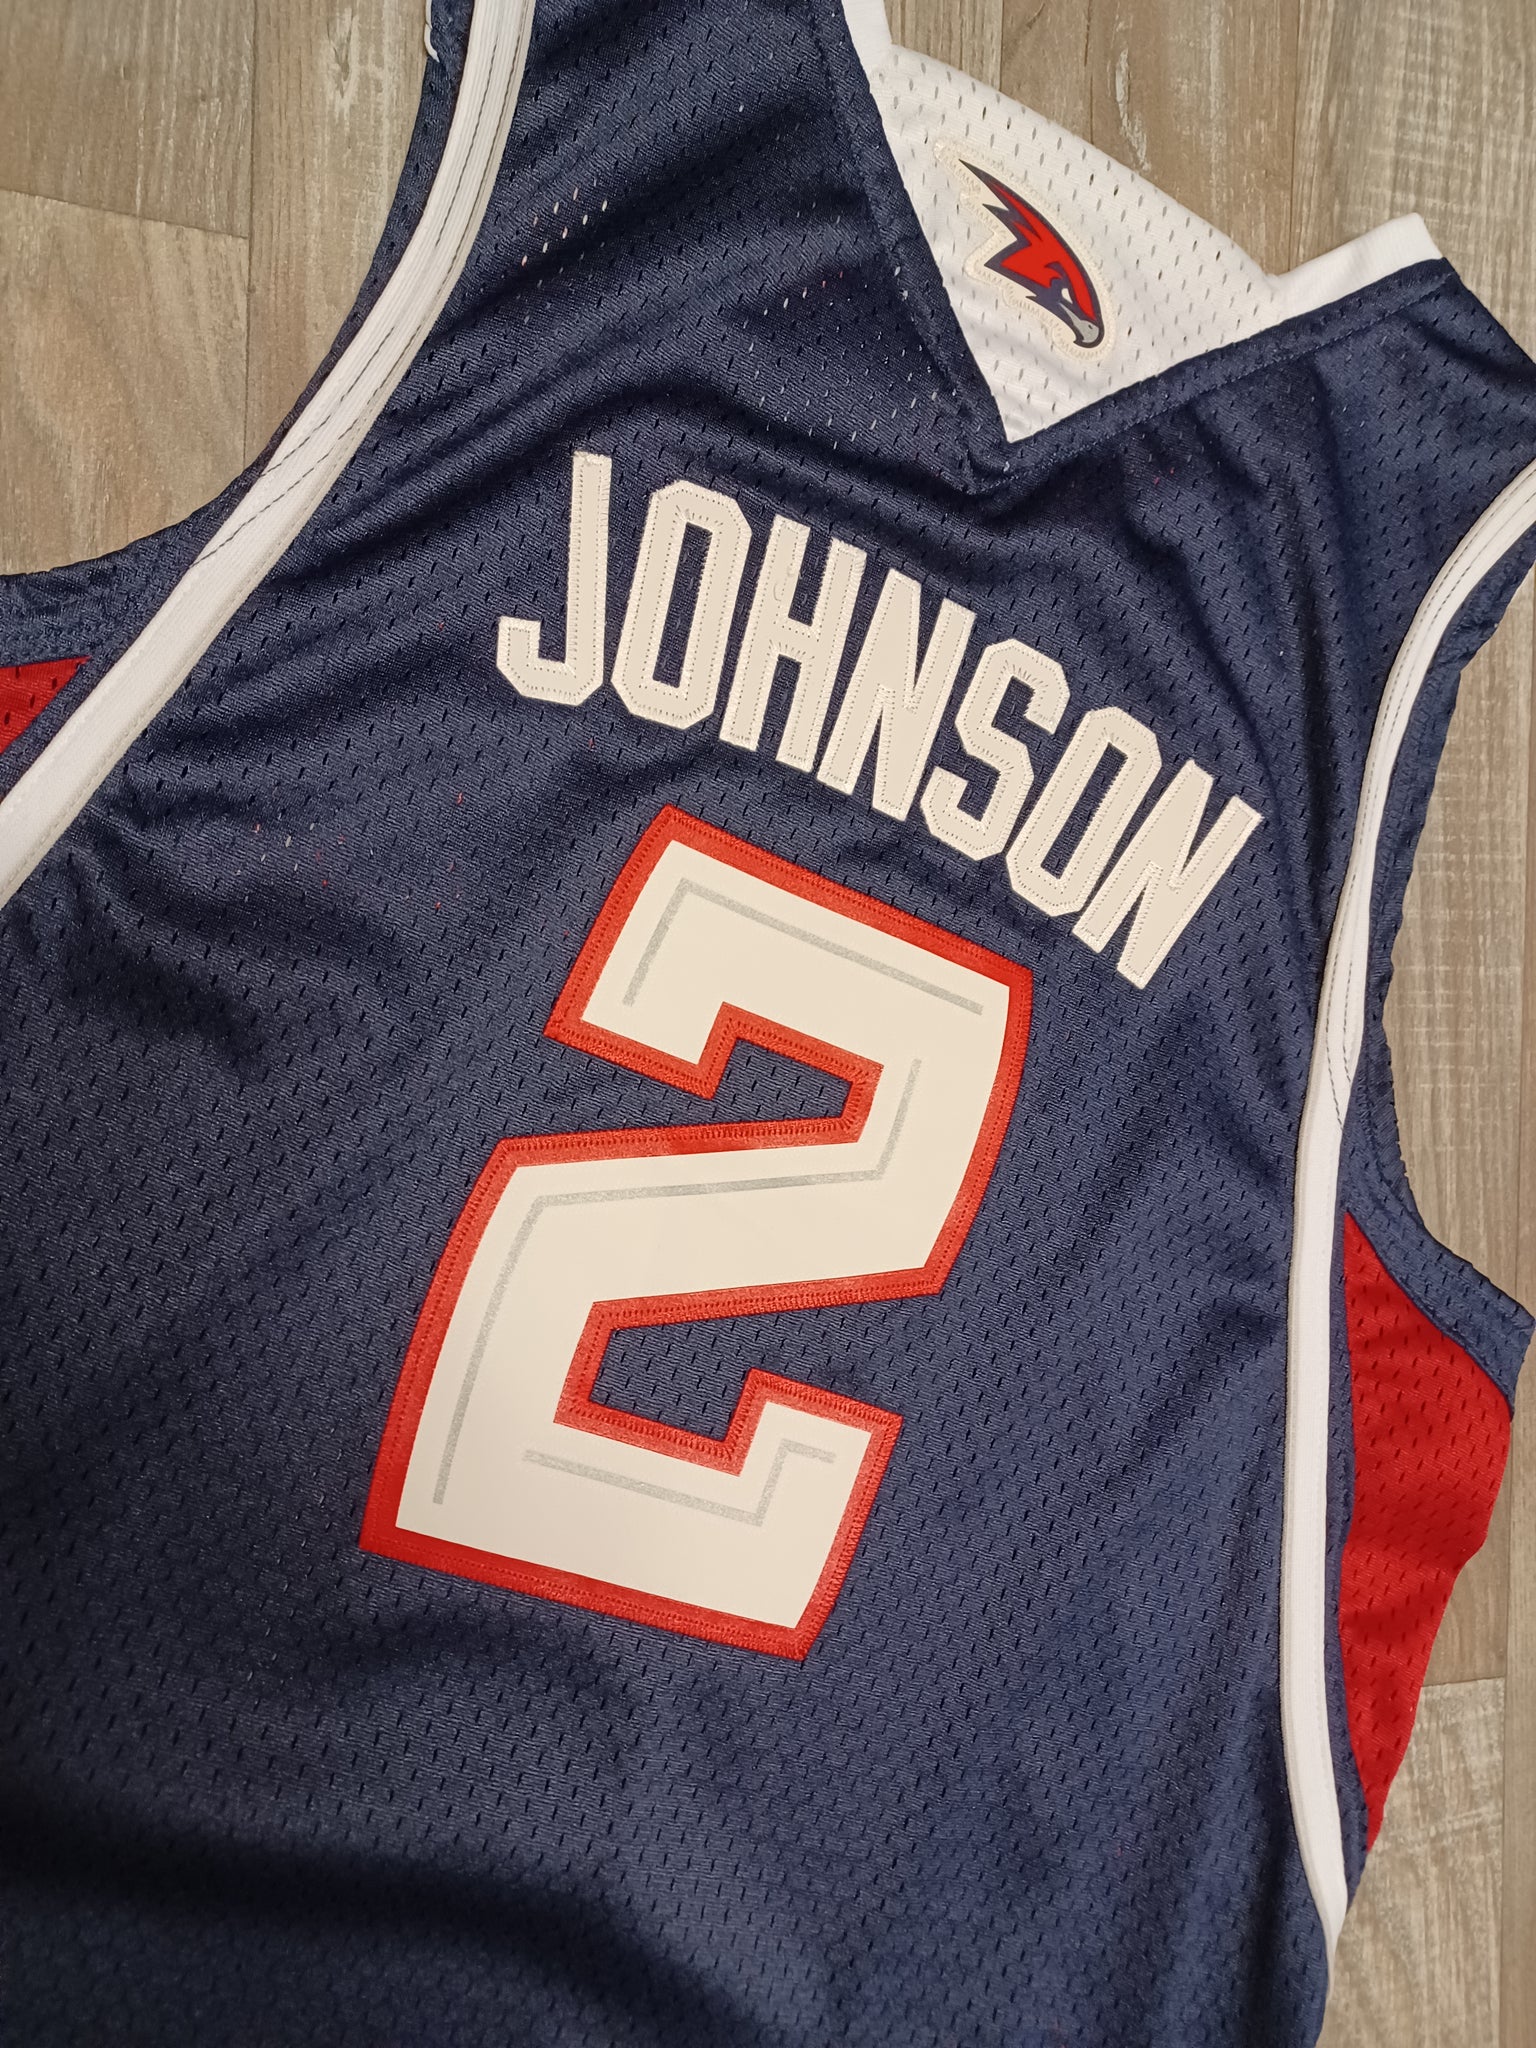 Authentic Atlanta Hawks Joe Johnson Adidas Jersey for Sale in Los